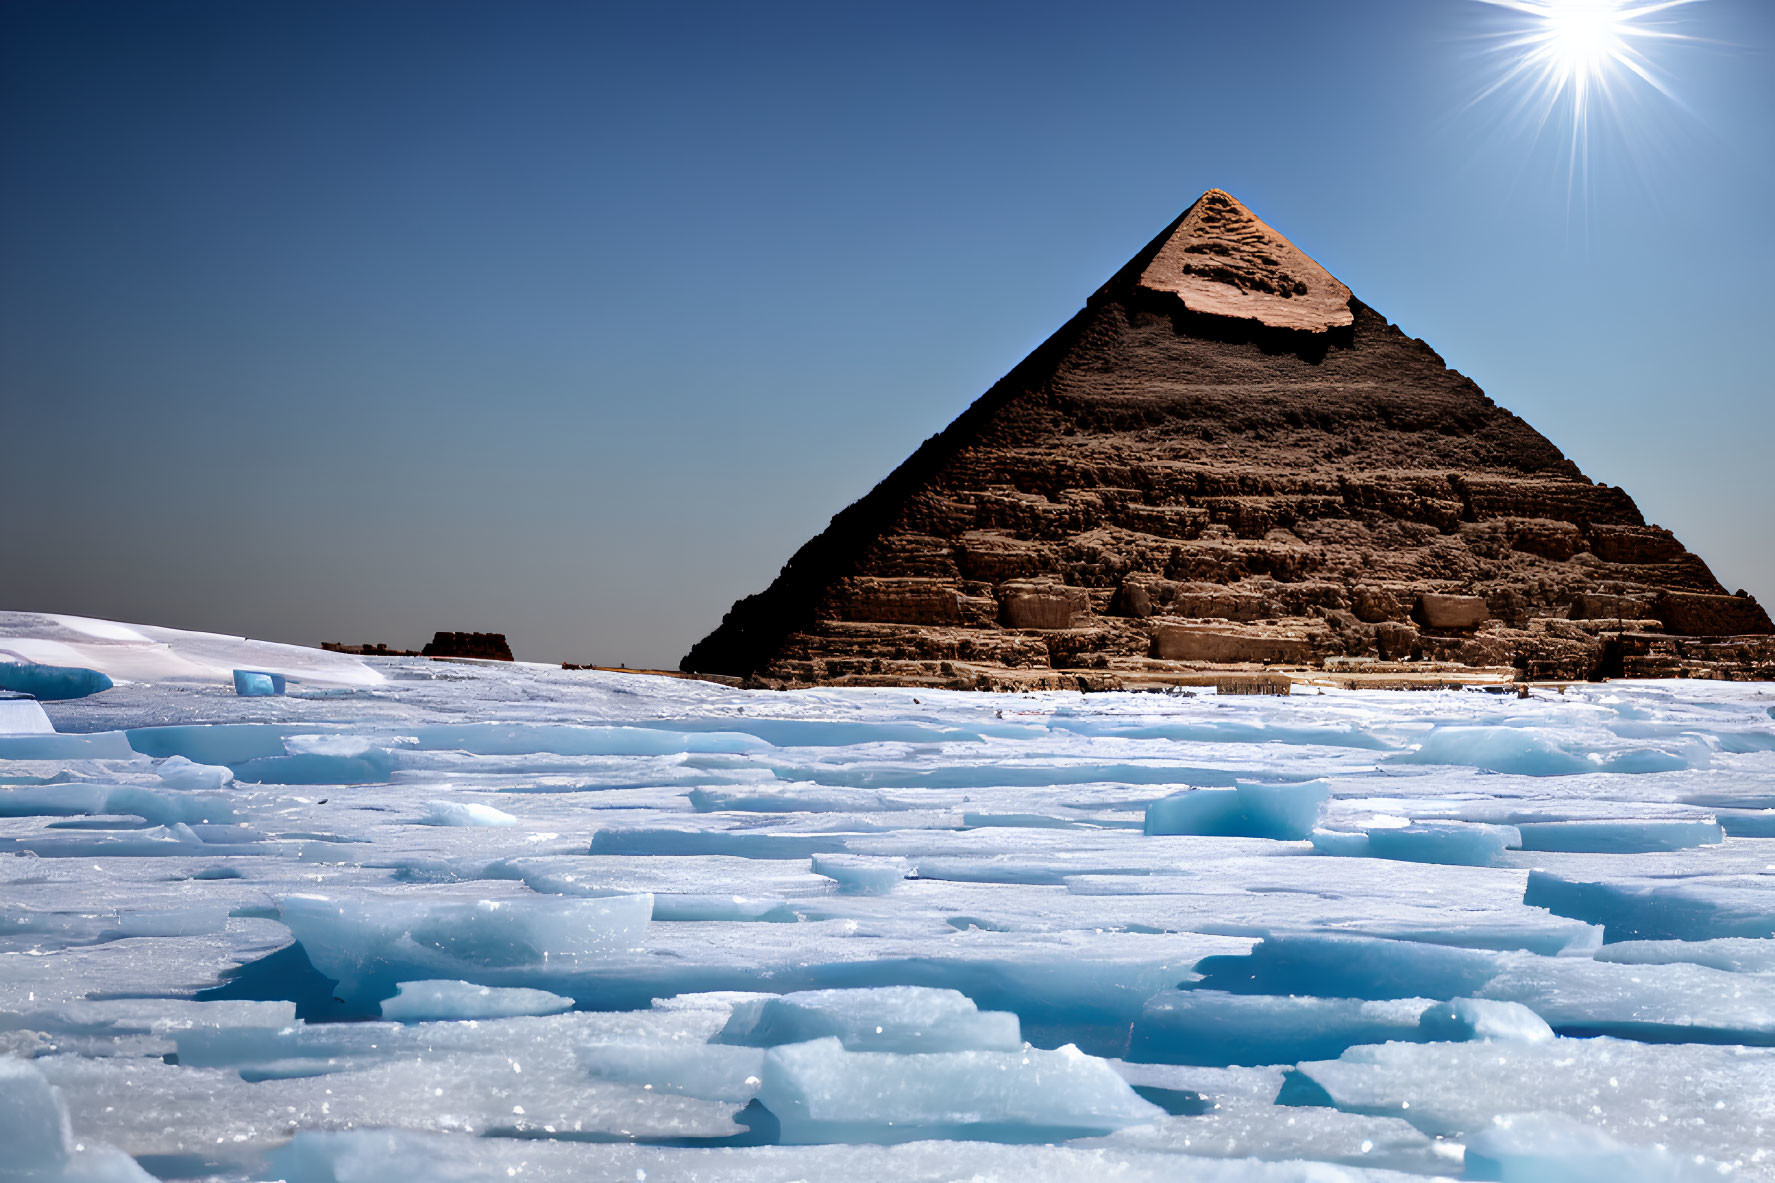 Damaged apex pyramid under bright sun with broken ice sheets